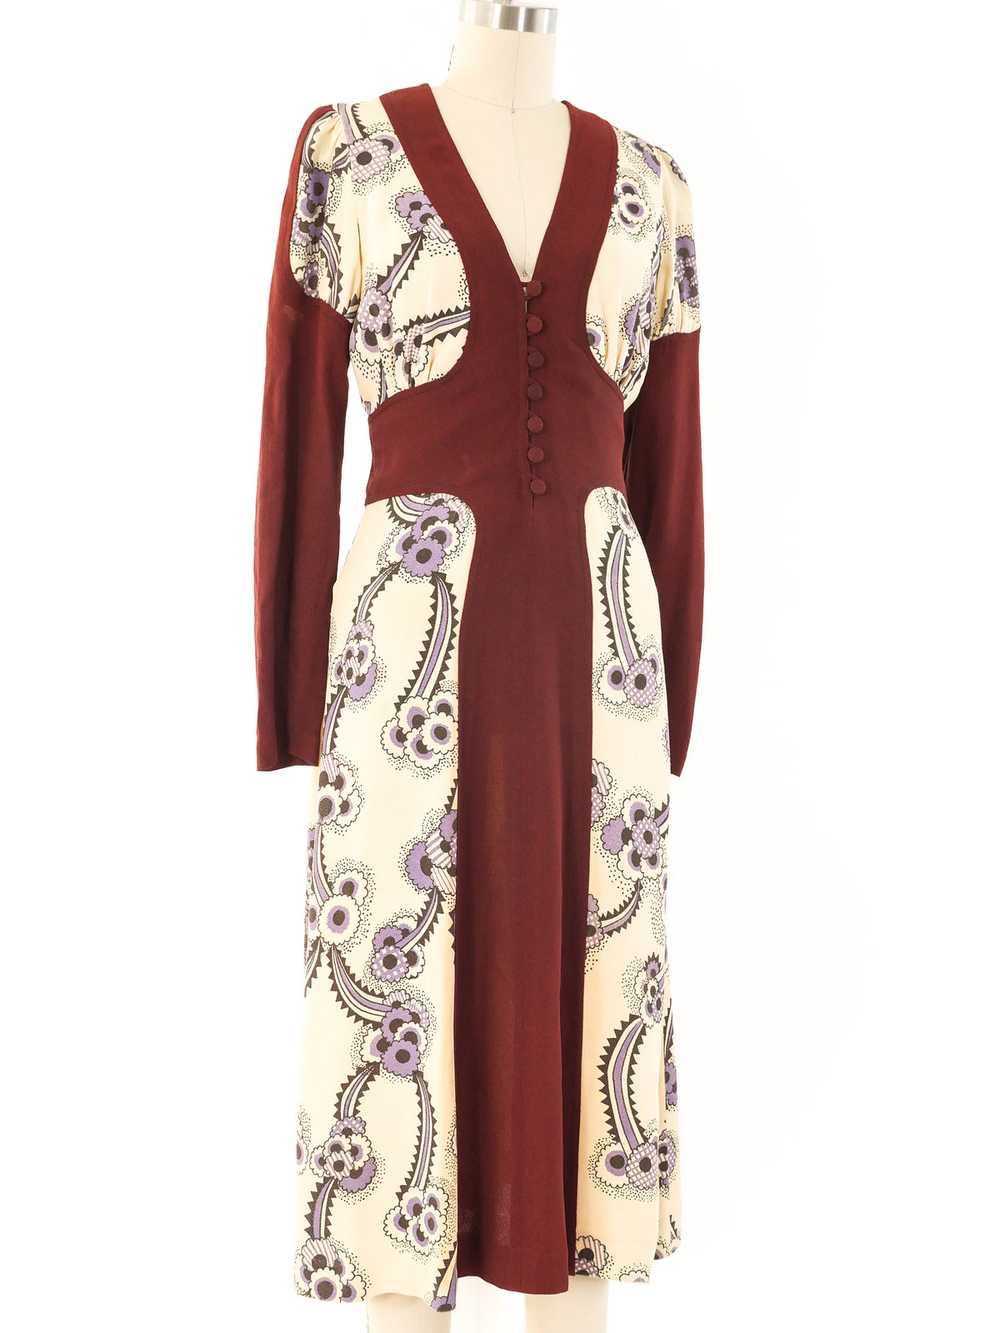 Ossie Clark Celia Birtwell Printed Crepe Dress - image 3